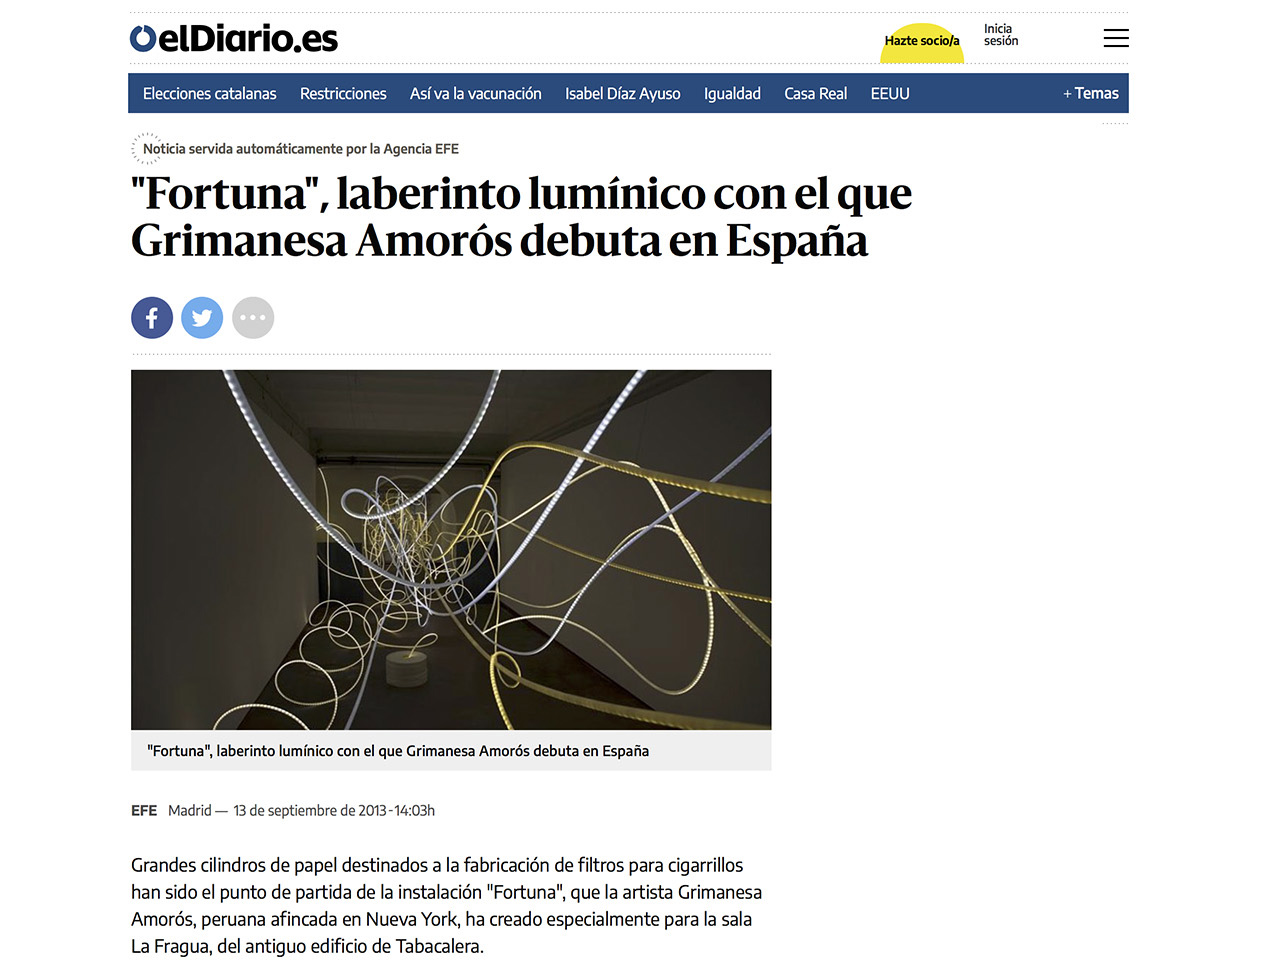 le ladiario article featuring grimanesa amoros' light installation Fortuna